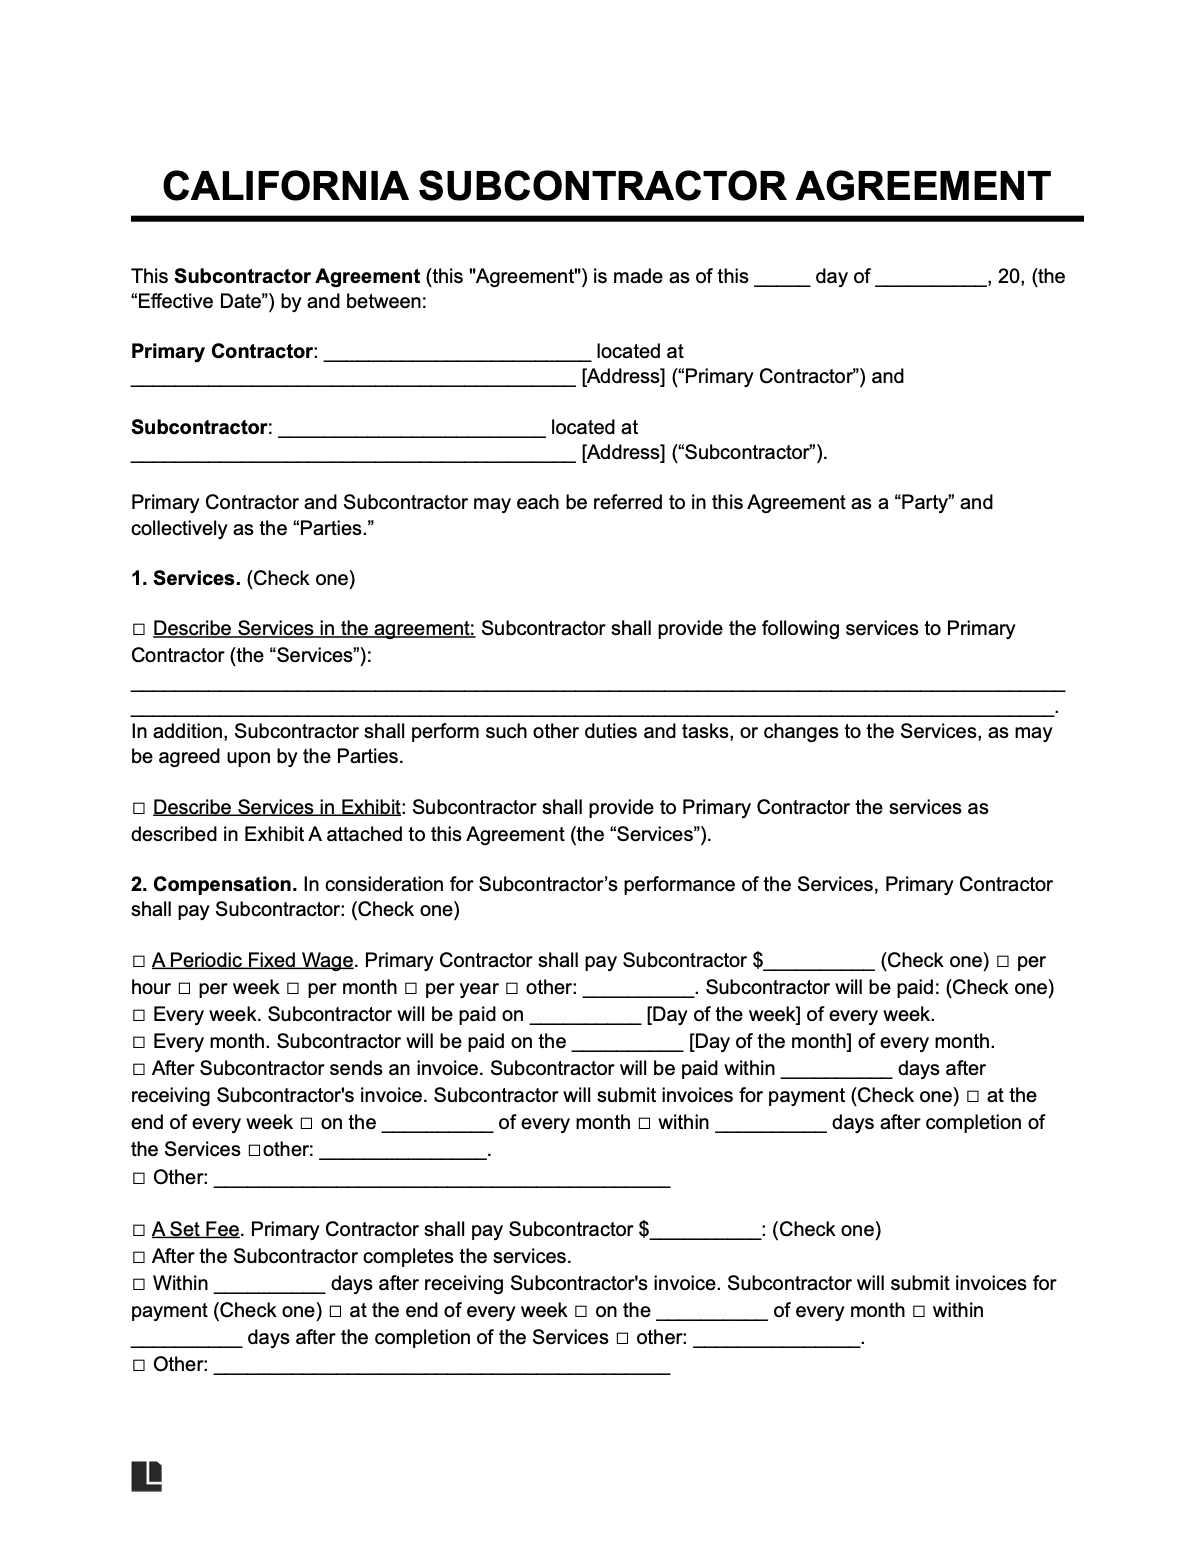 california subcontractor agreement template